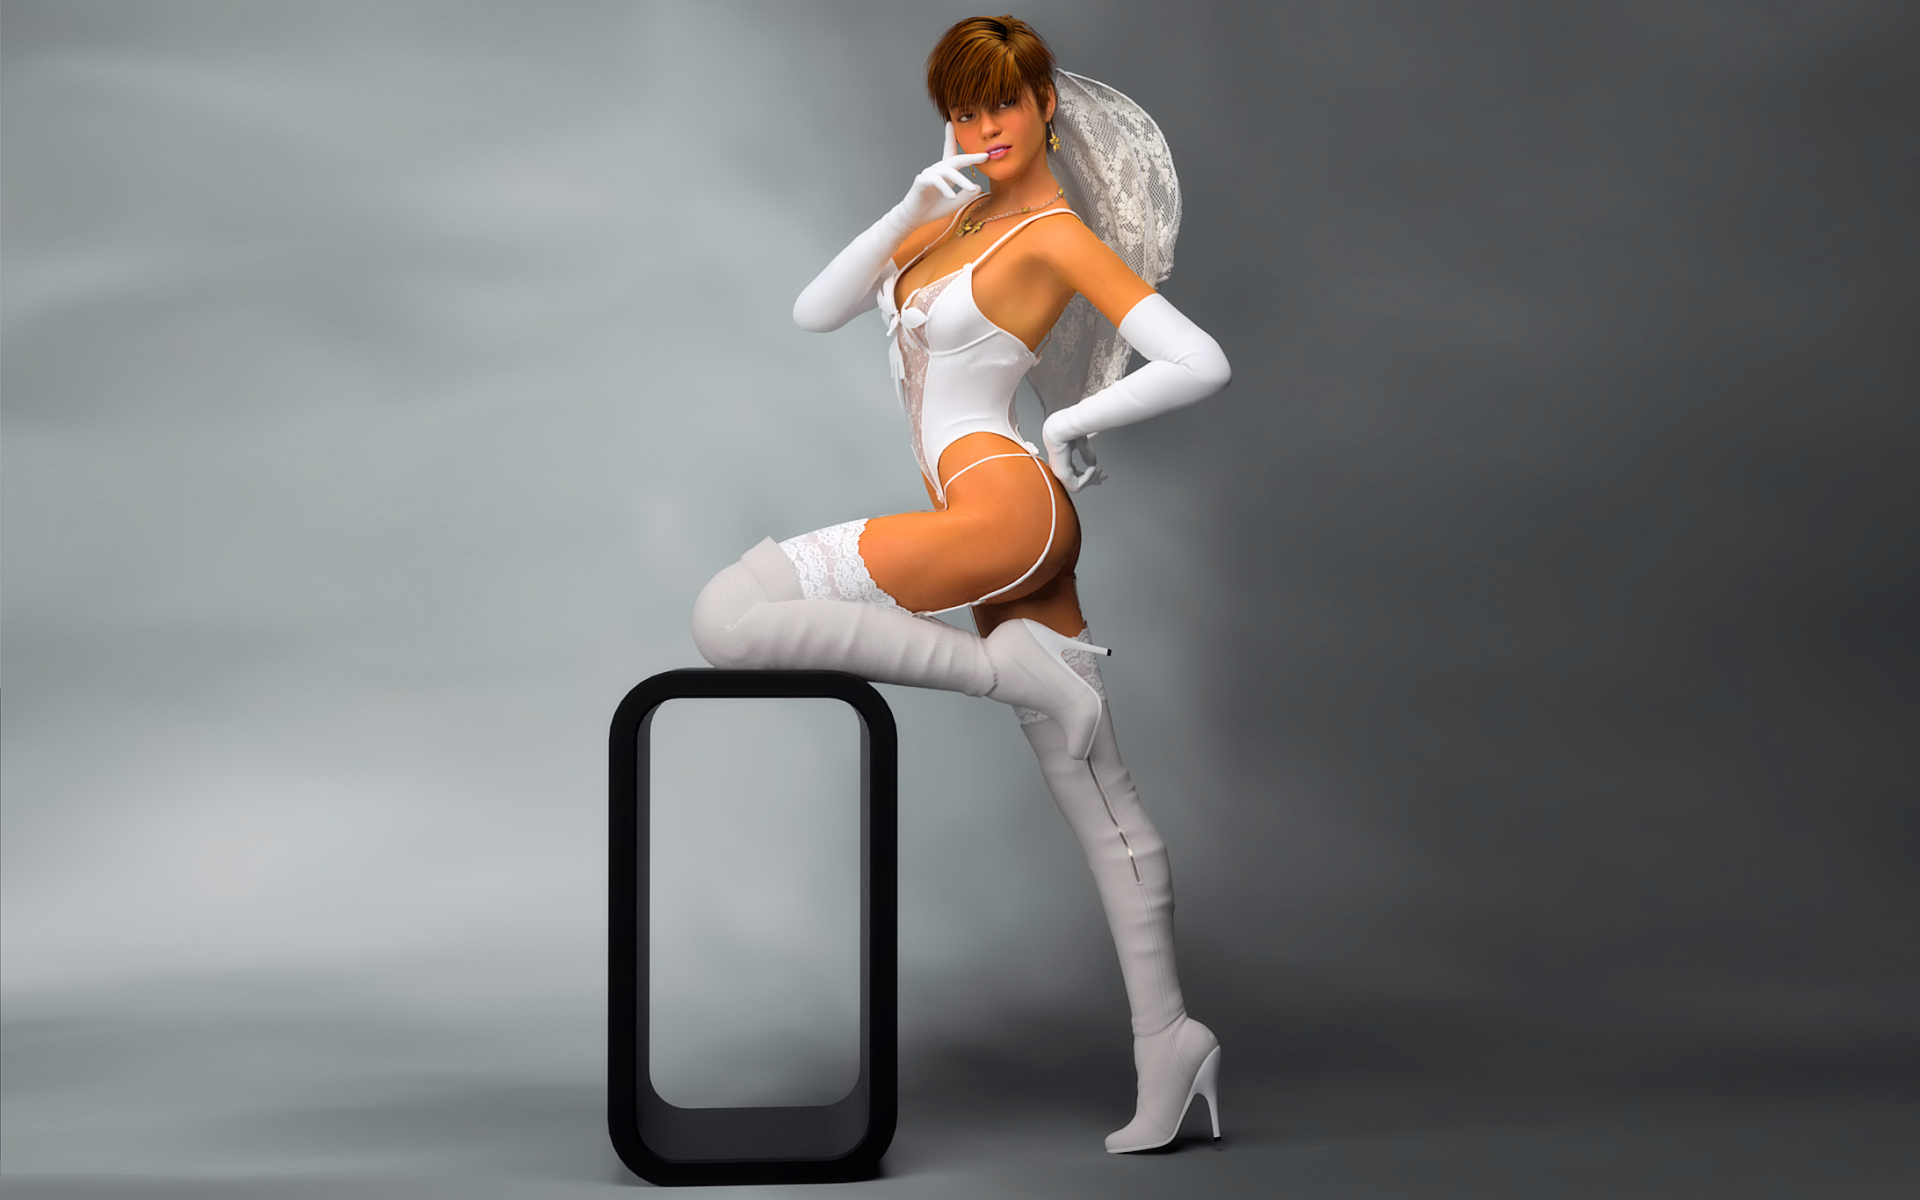 General 1920x1200 CGI lingerie women digital art white lingerie high heeled boots heels looking at viewer women indoors indoors studio necklace short hair